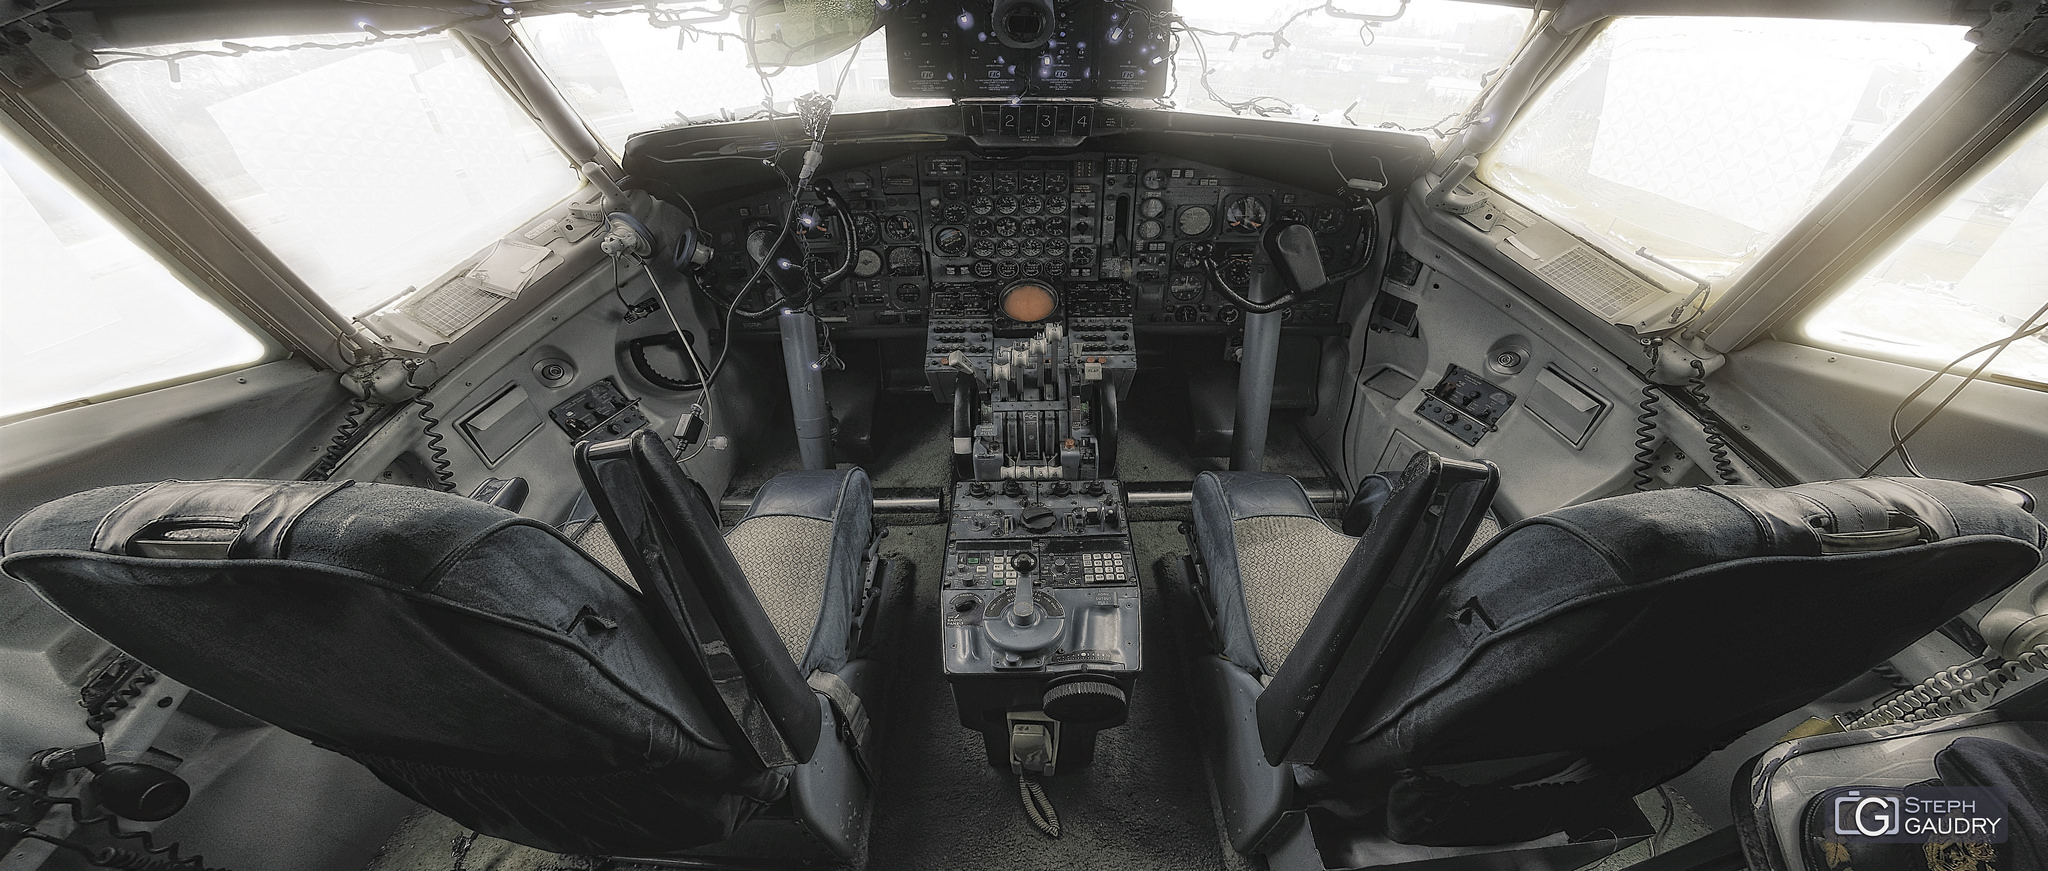 Machines volantes / Cockpit Boeing 707 - Flat colored version